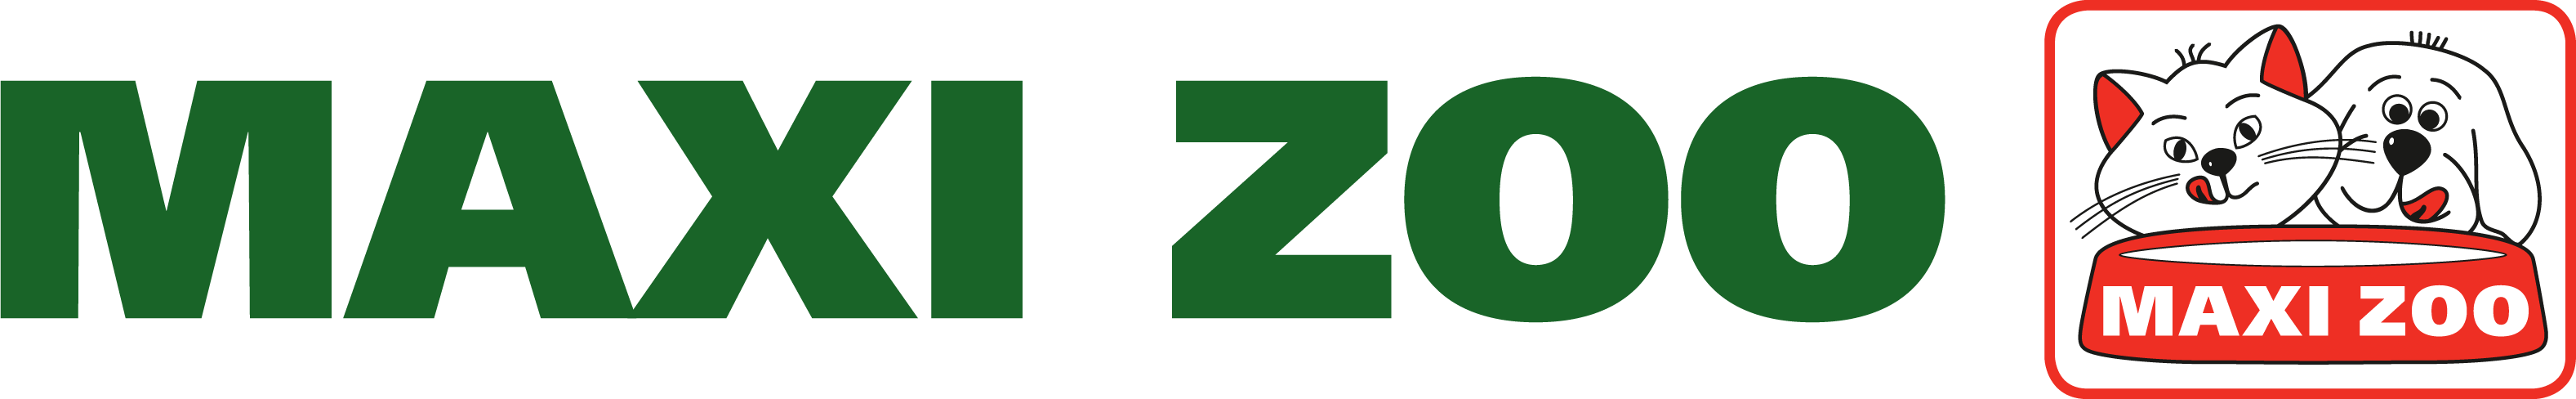 maxi-zoo